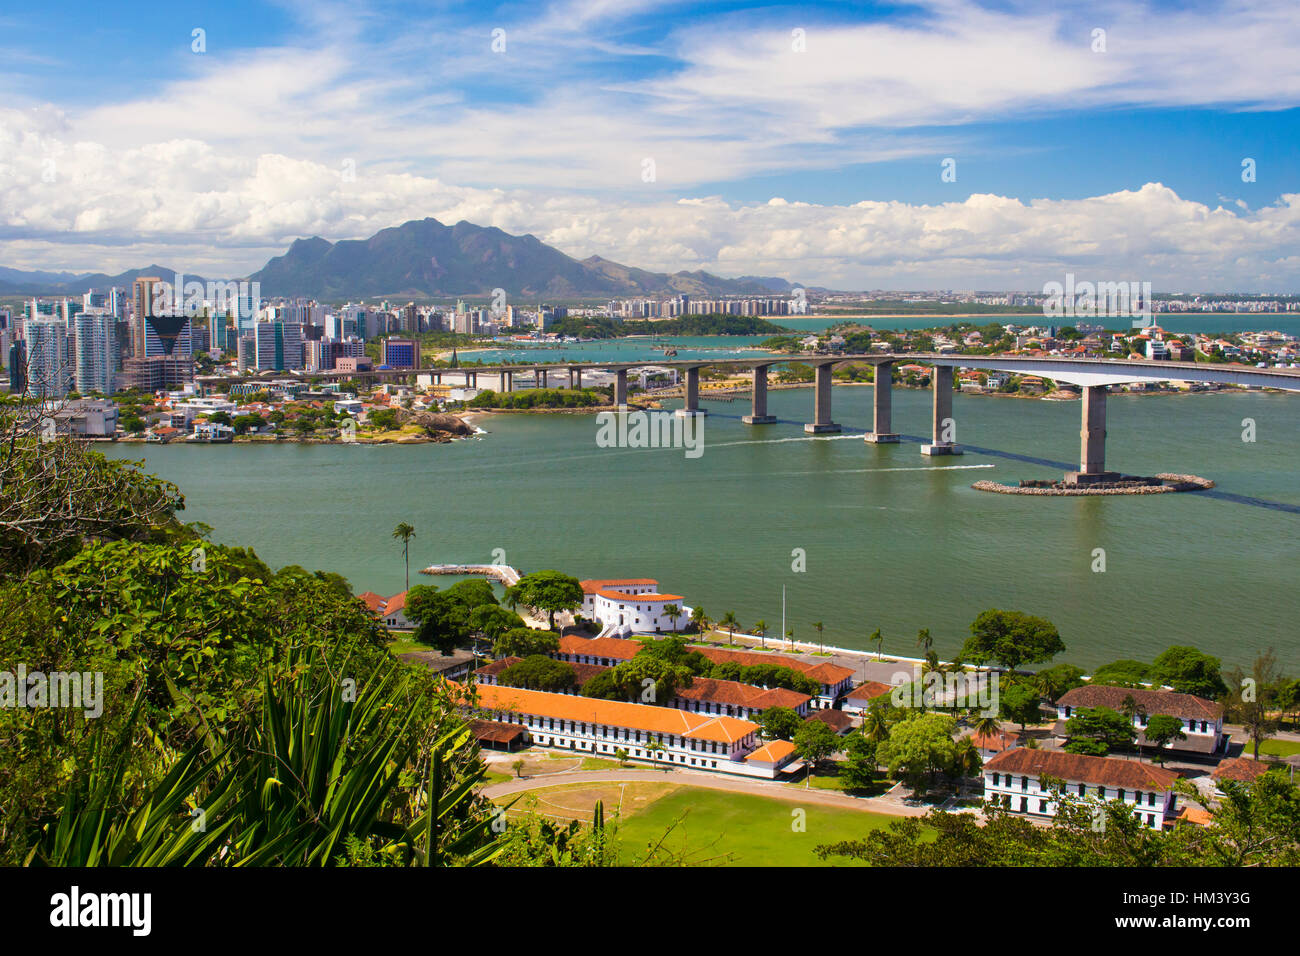 Vitoria city, capital of Espirito Santo state, Brazil Stock Photo